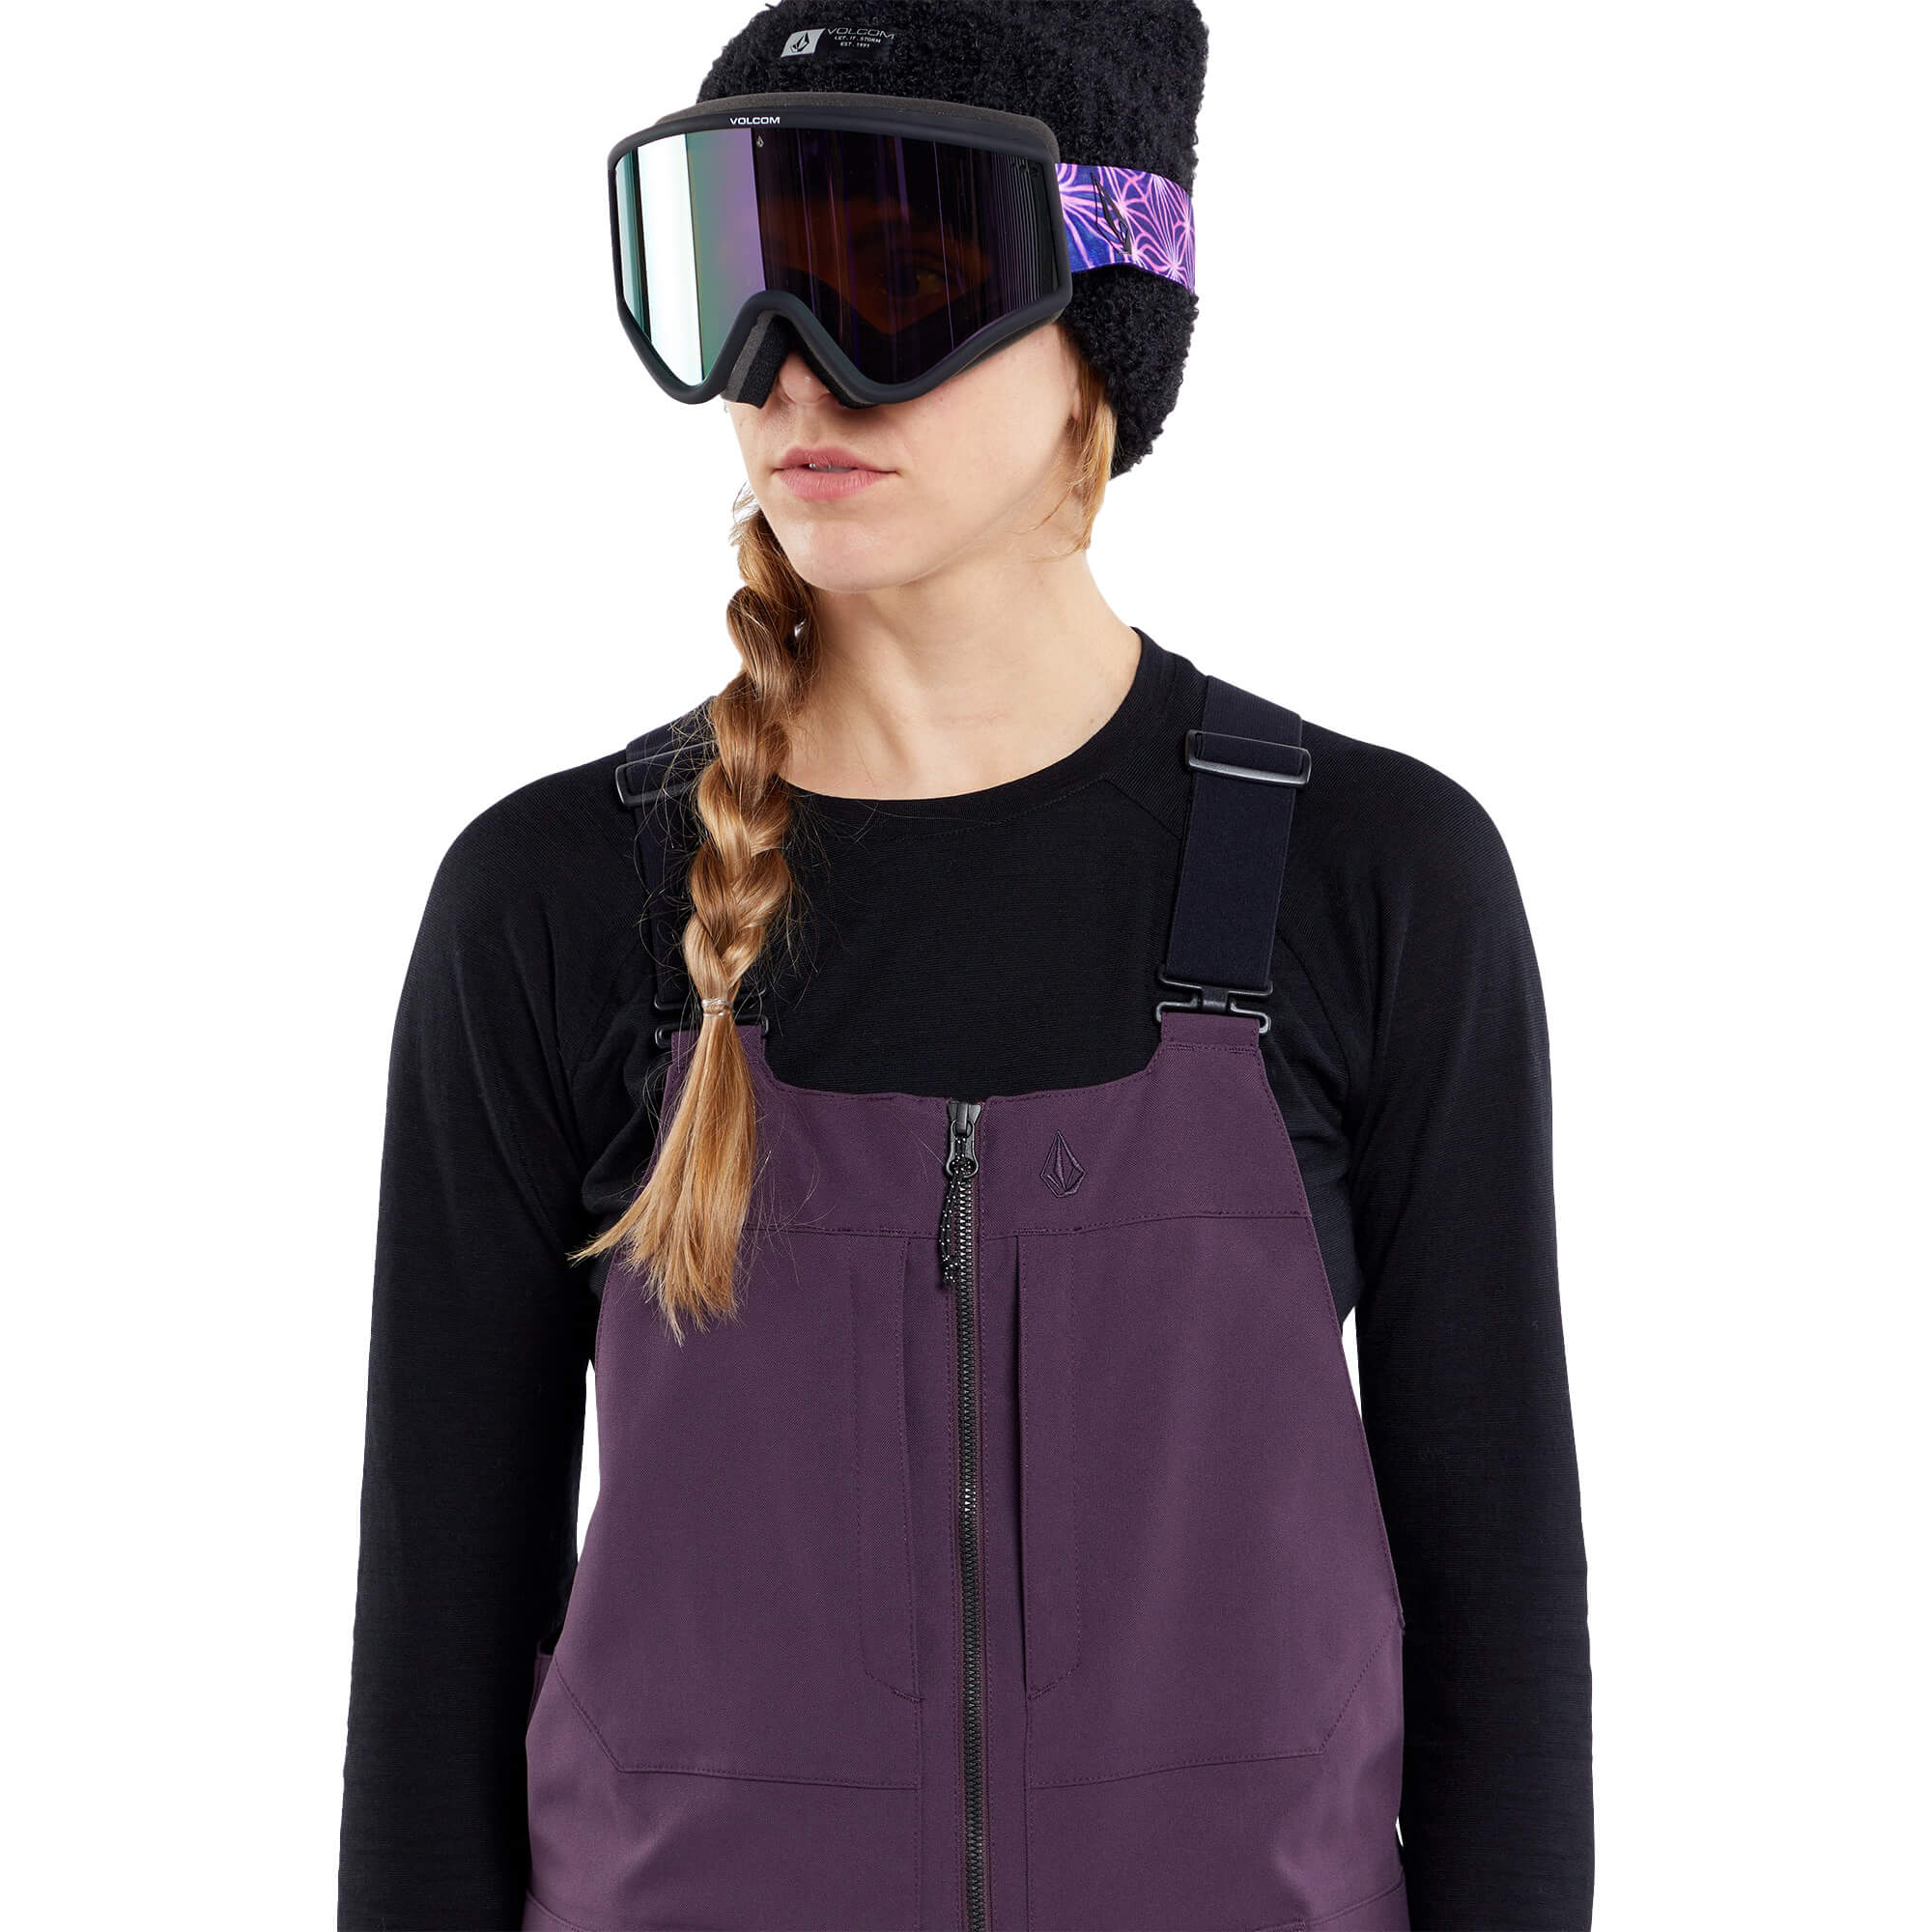 Volcom Swift Bib Overall Women's Snowboard/Ski Pants